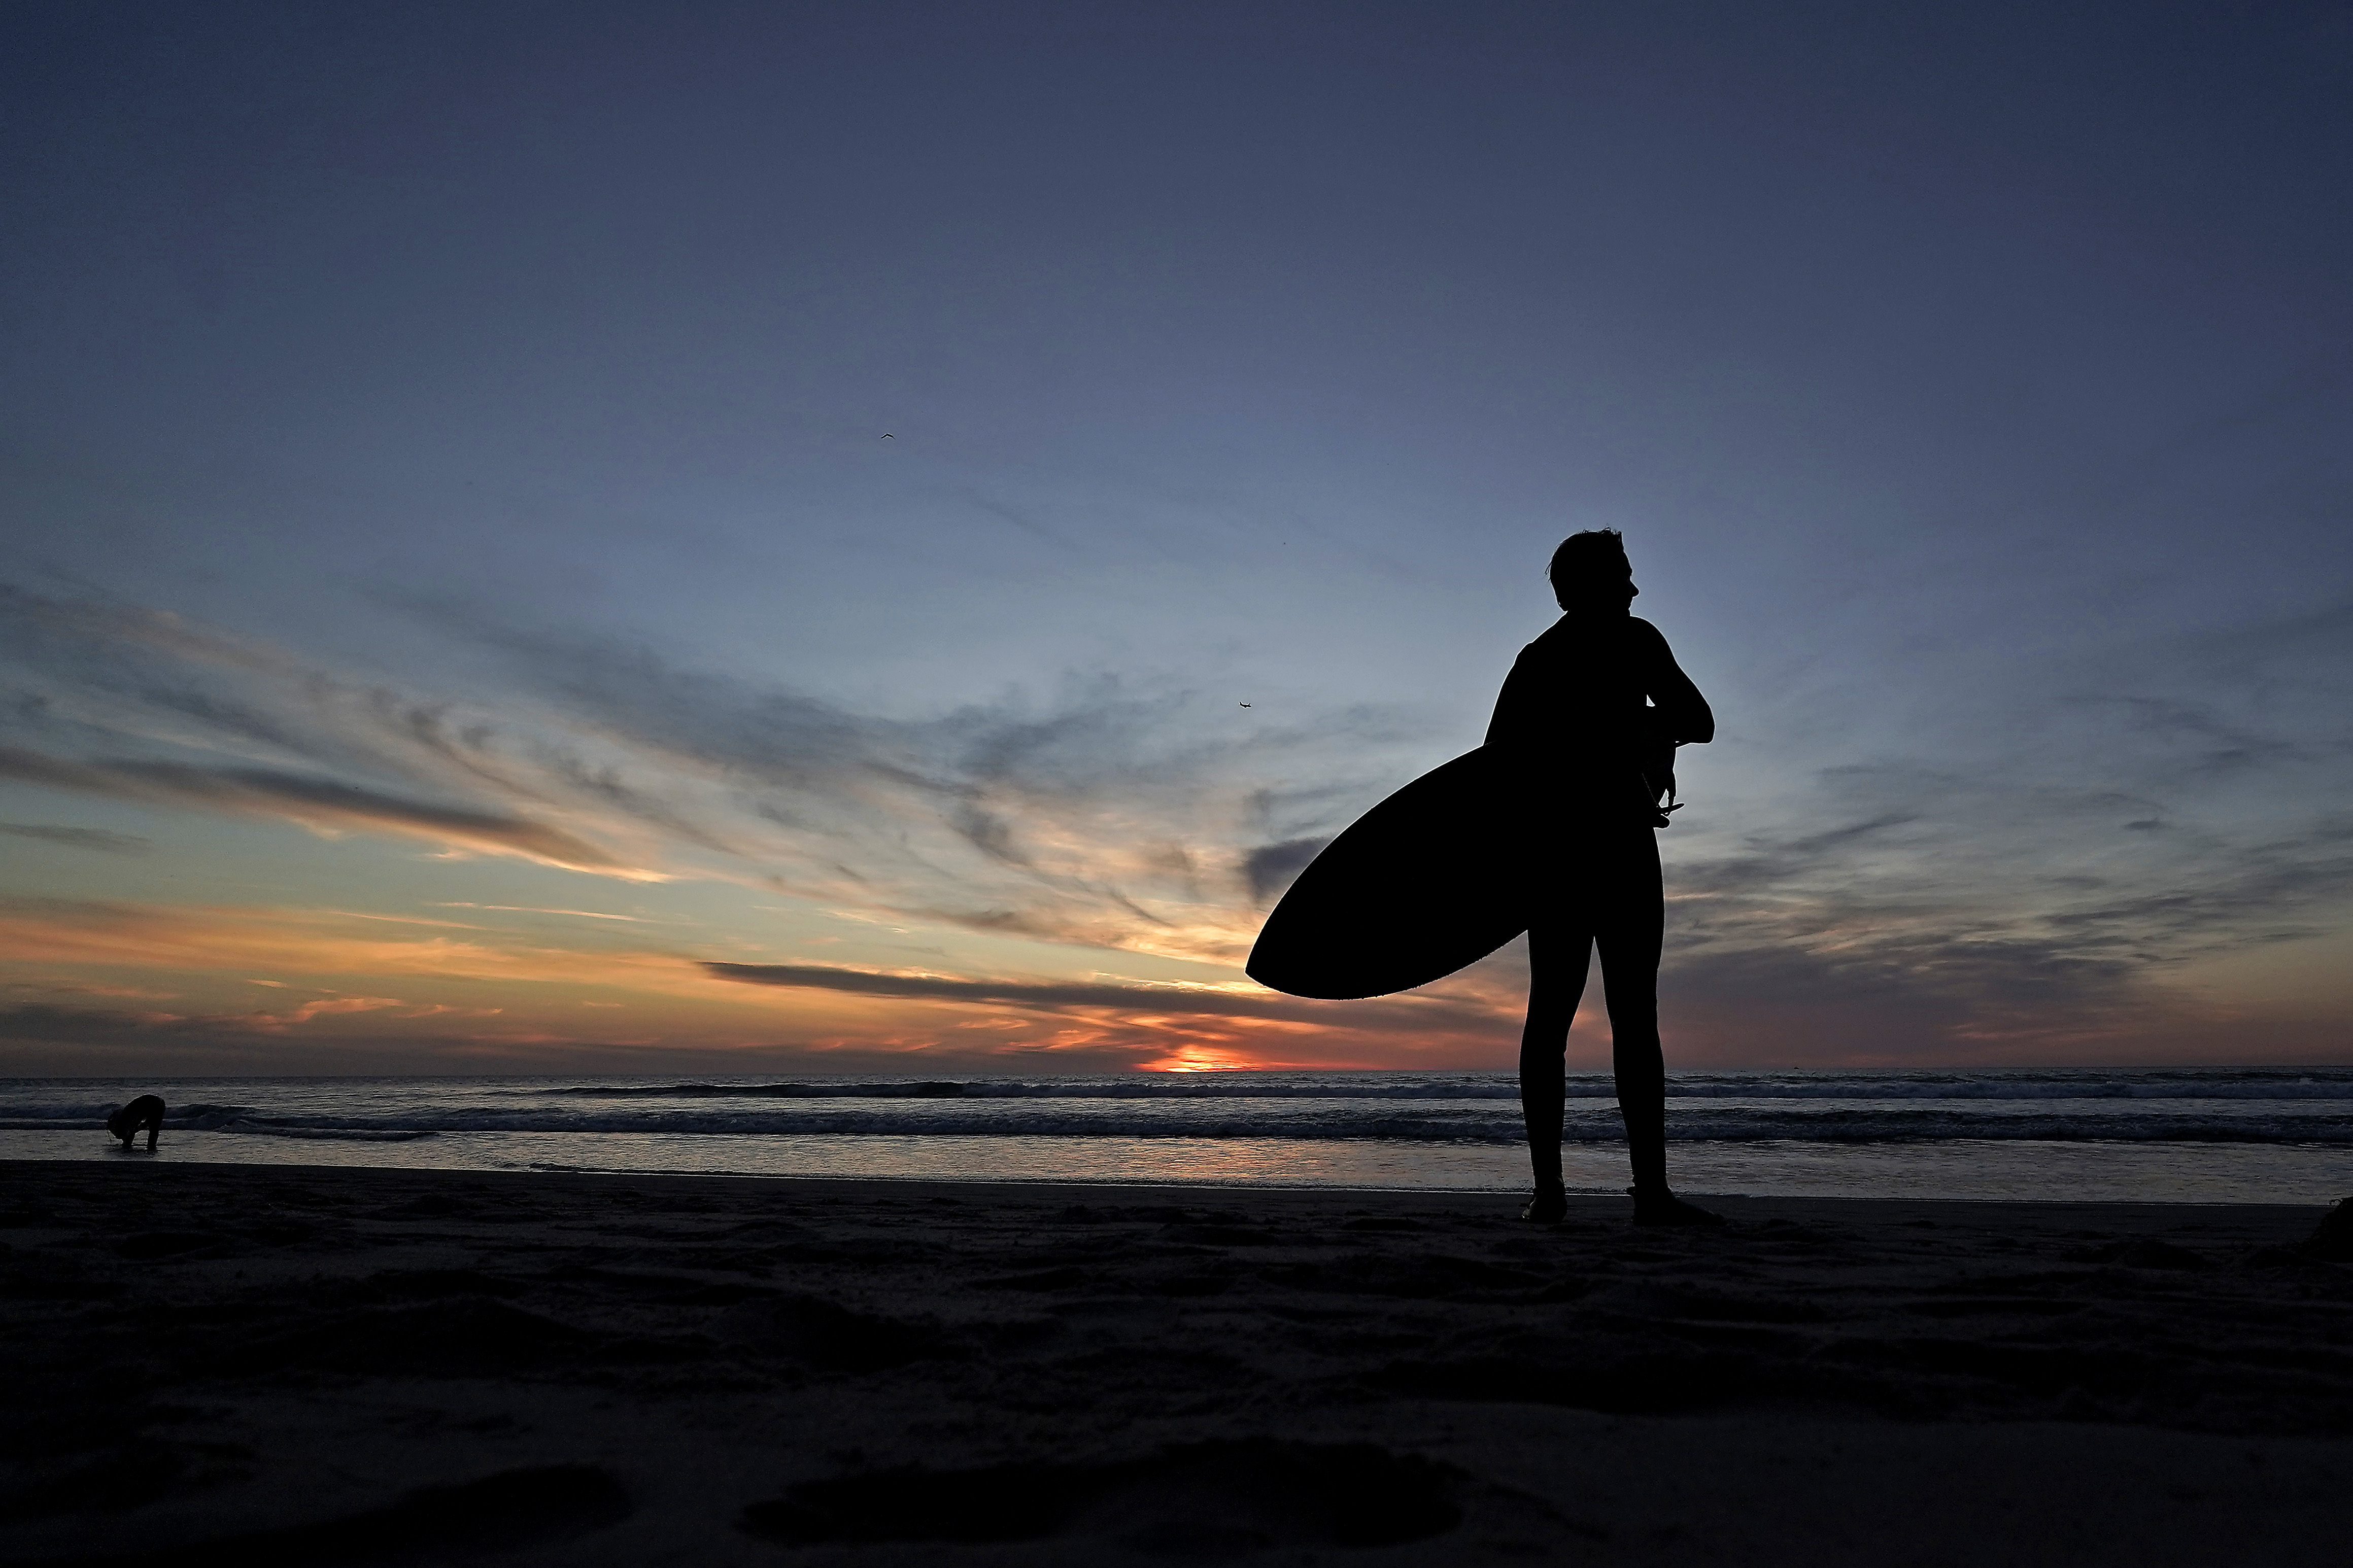 A surfer in San Diego